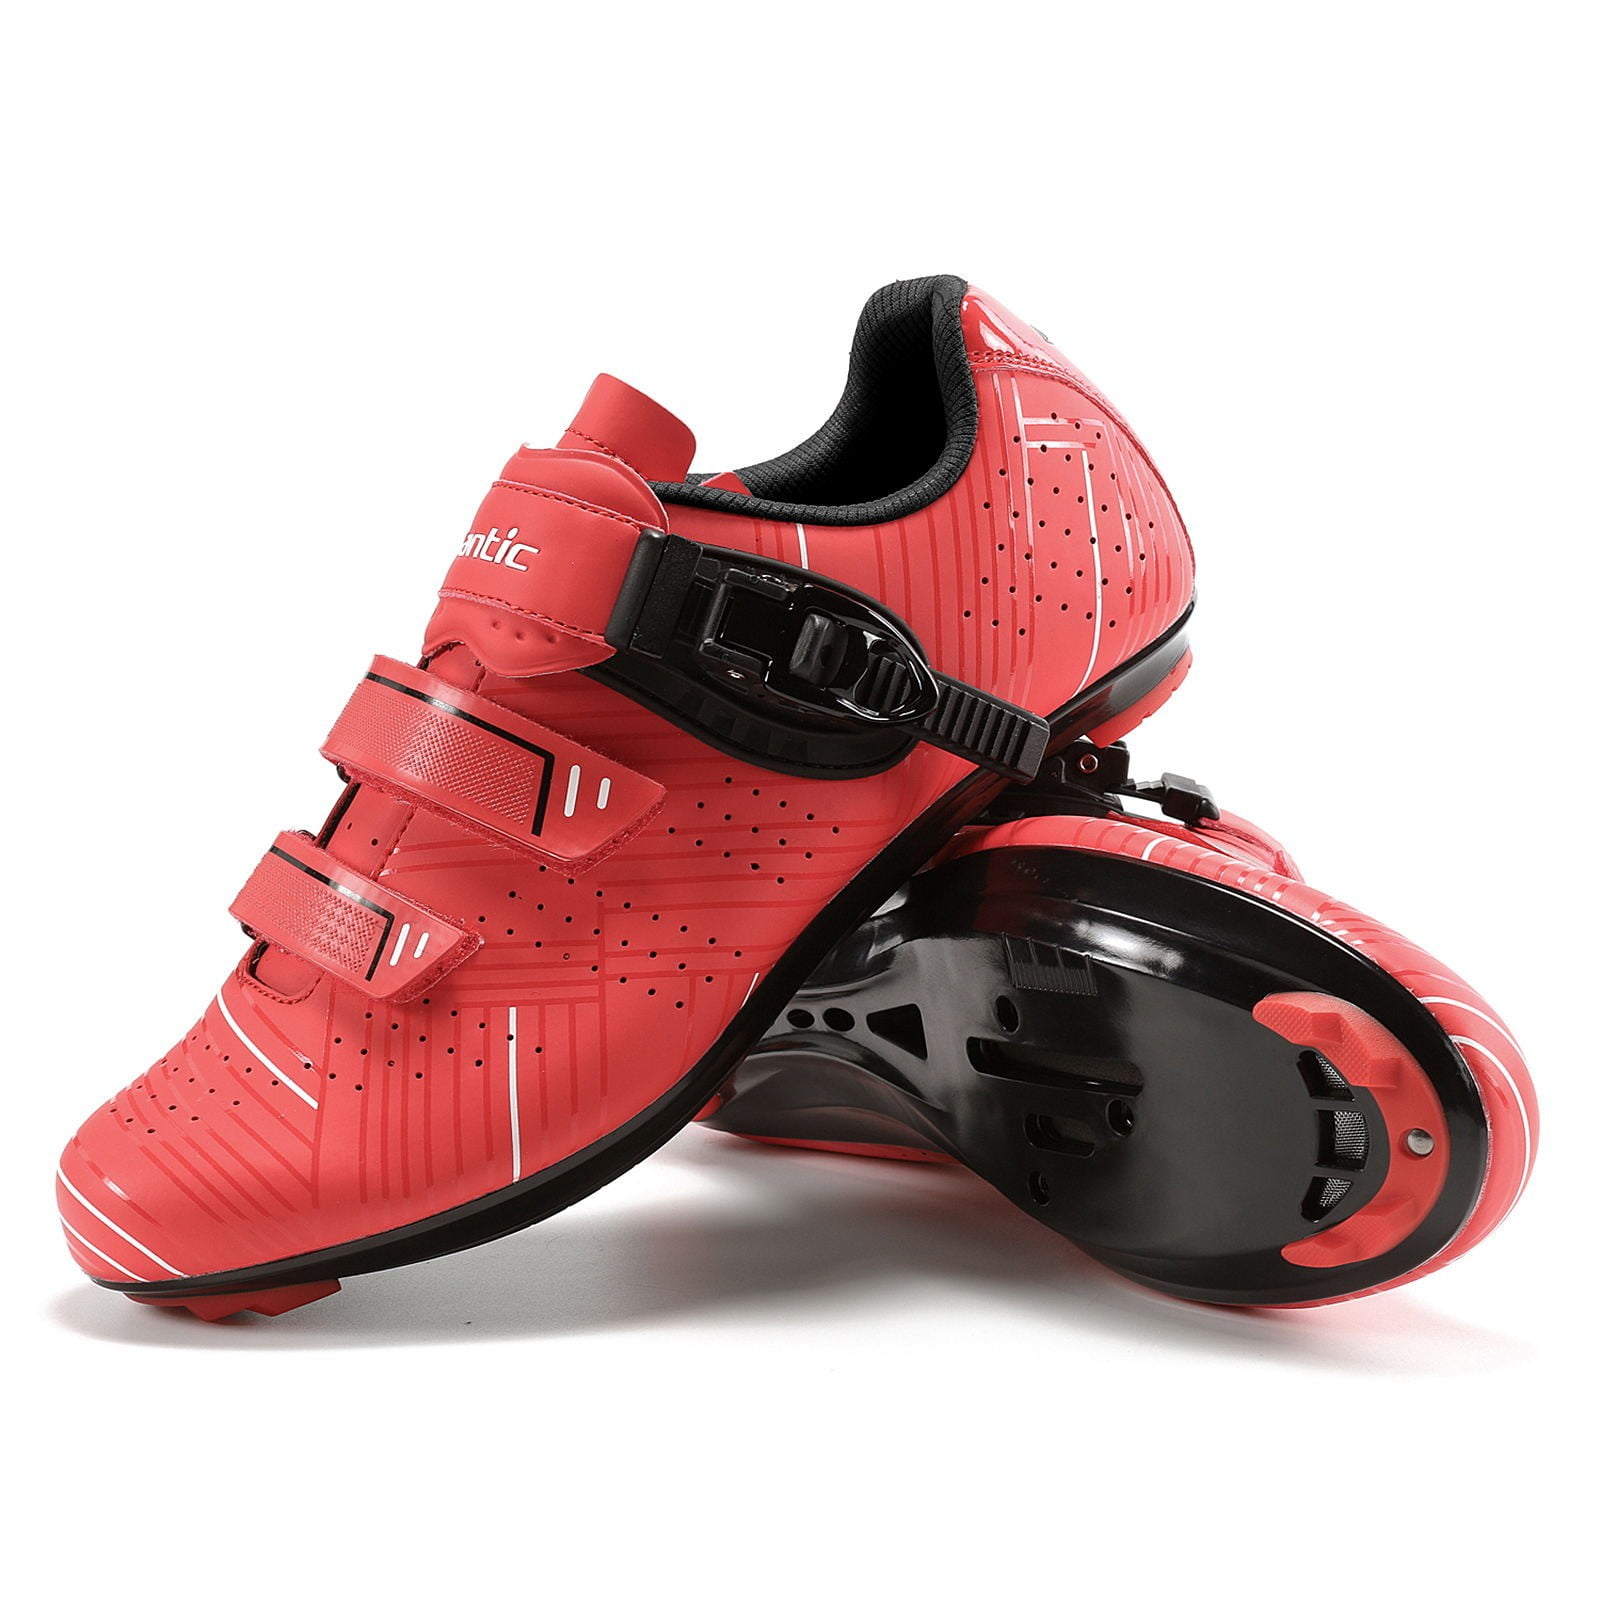 Details about   Santic Cycling Shoes Men'S Or Women'S Road Cycling Riding Shoes Spin Shoes With 